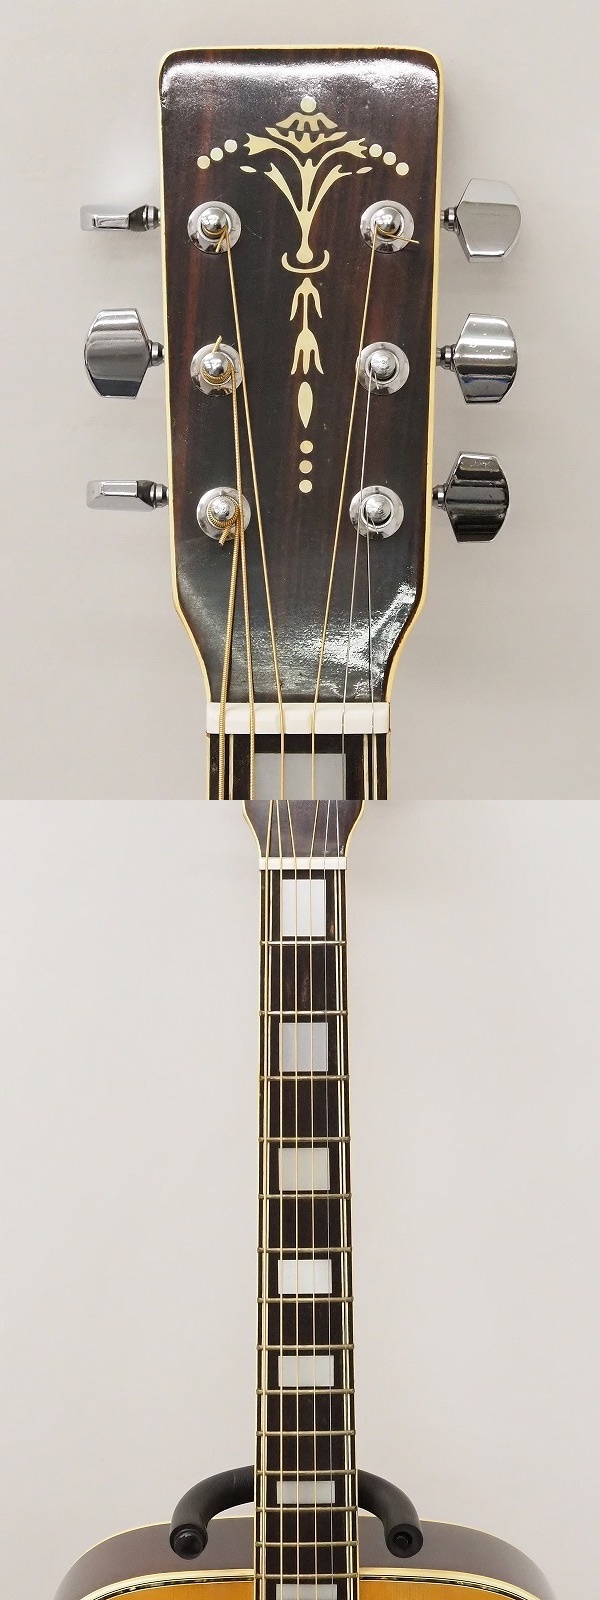 Kansas WG-250 アコースティックギター 鈴木 カンサス キワヤ